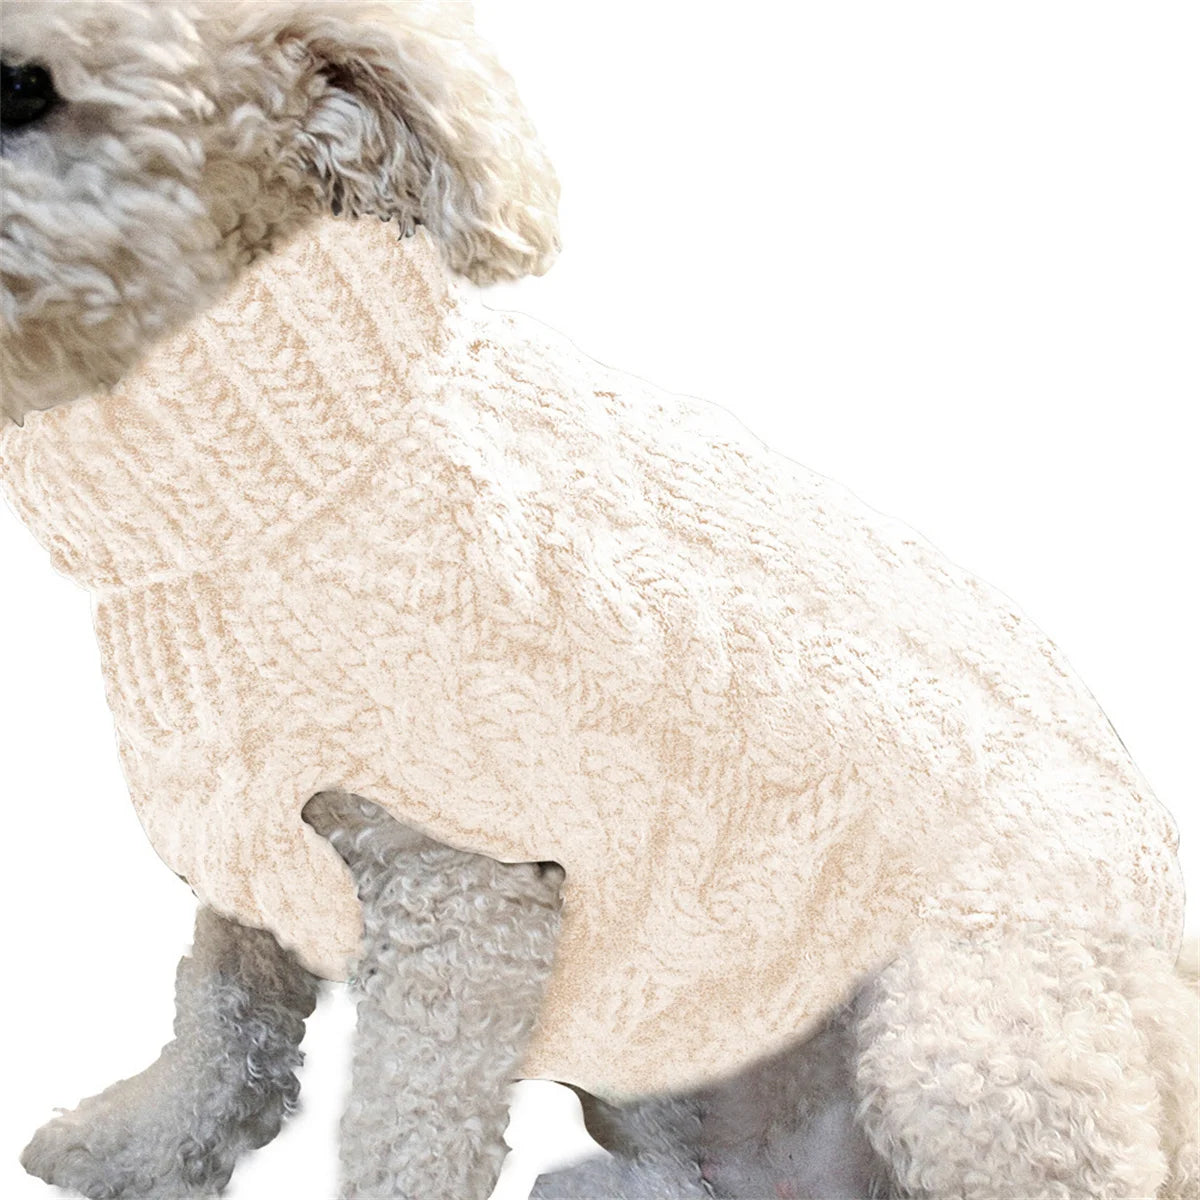 Winter Warm Pet Sweaters for Small Medium Dogs Cats: Soft Wool Turtleneck Vest Coat Jacket.  petlums.com 2 S 